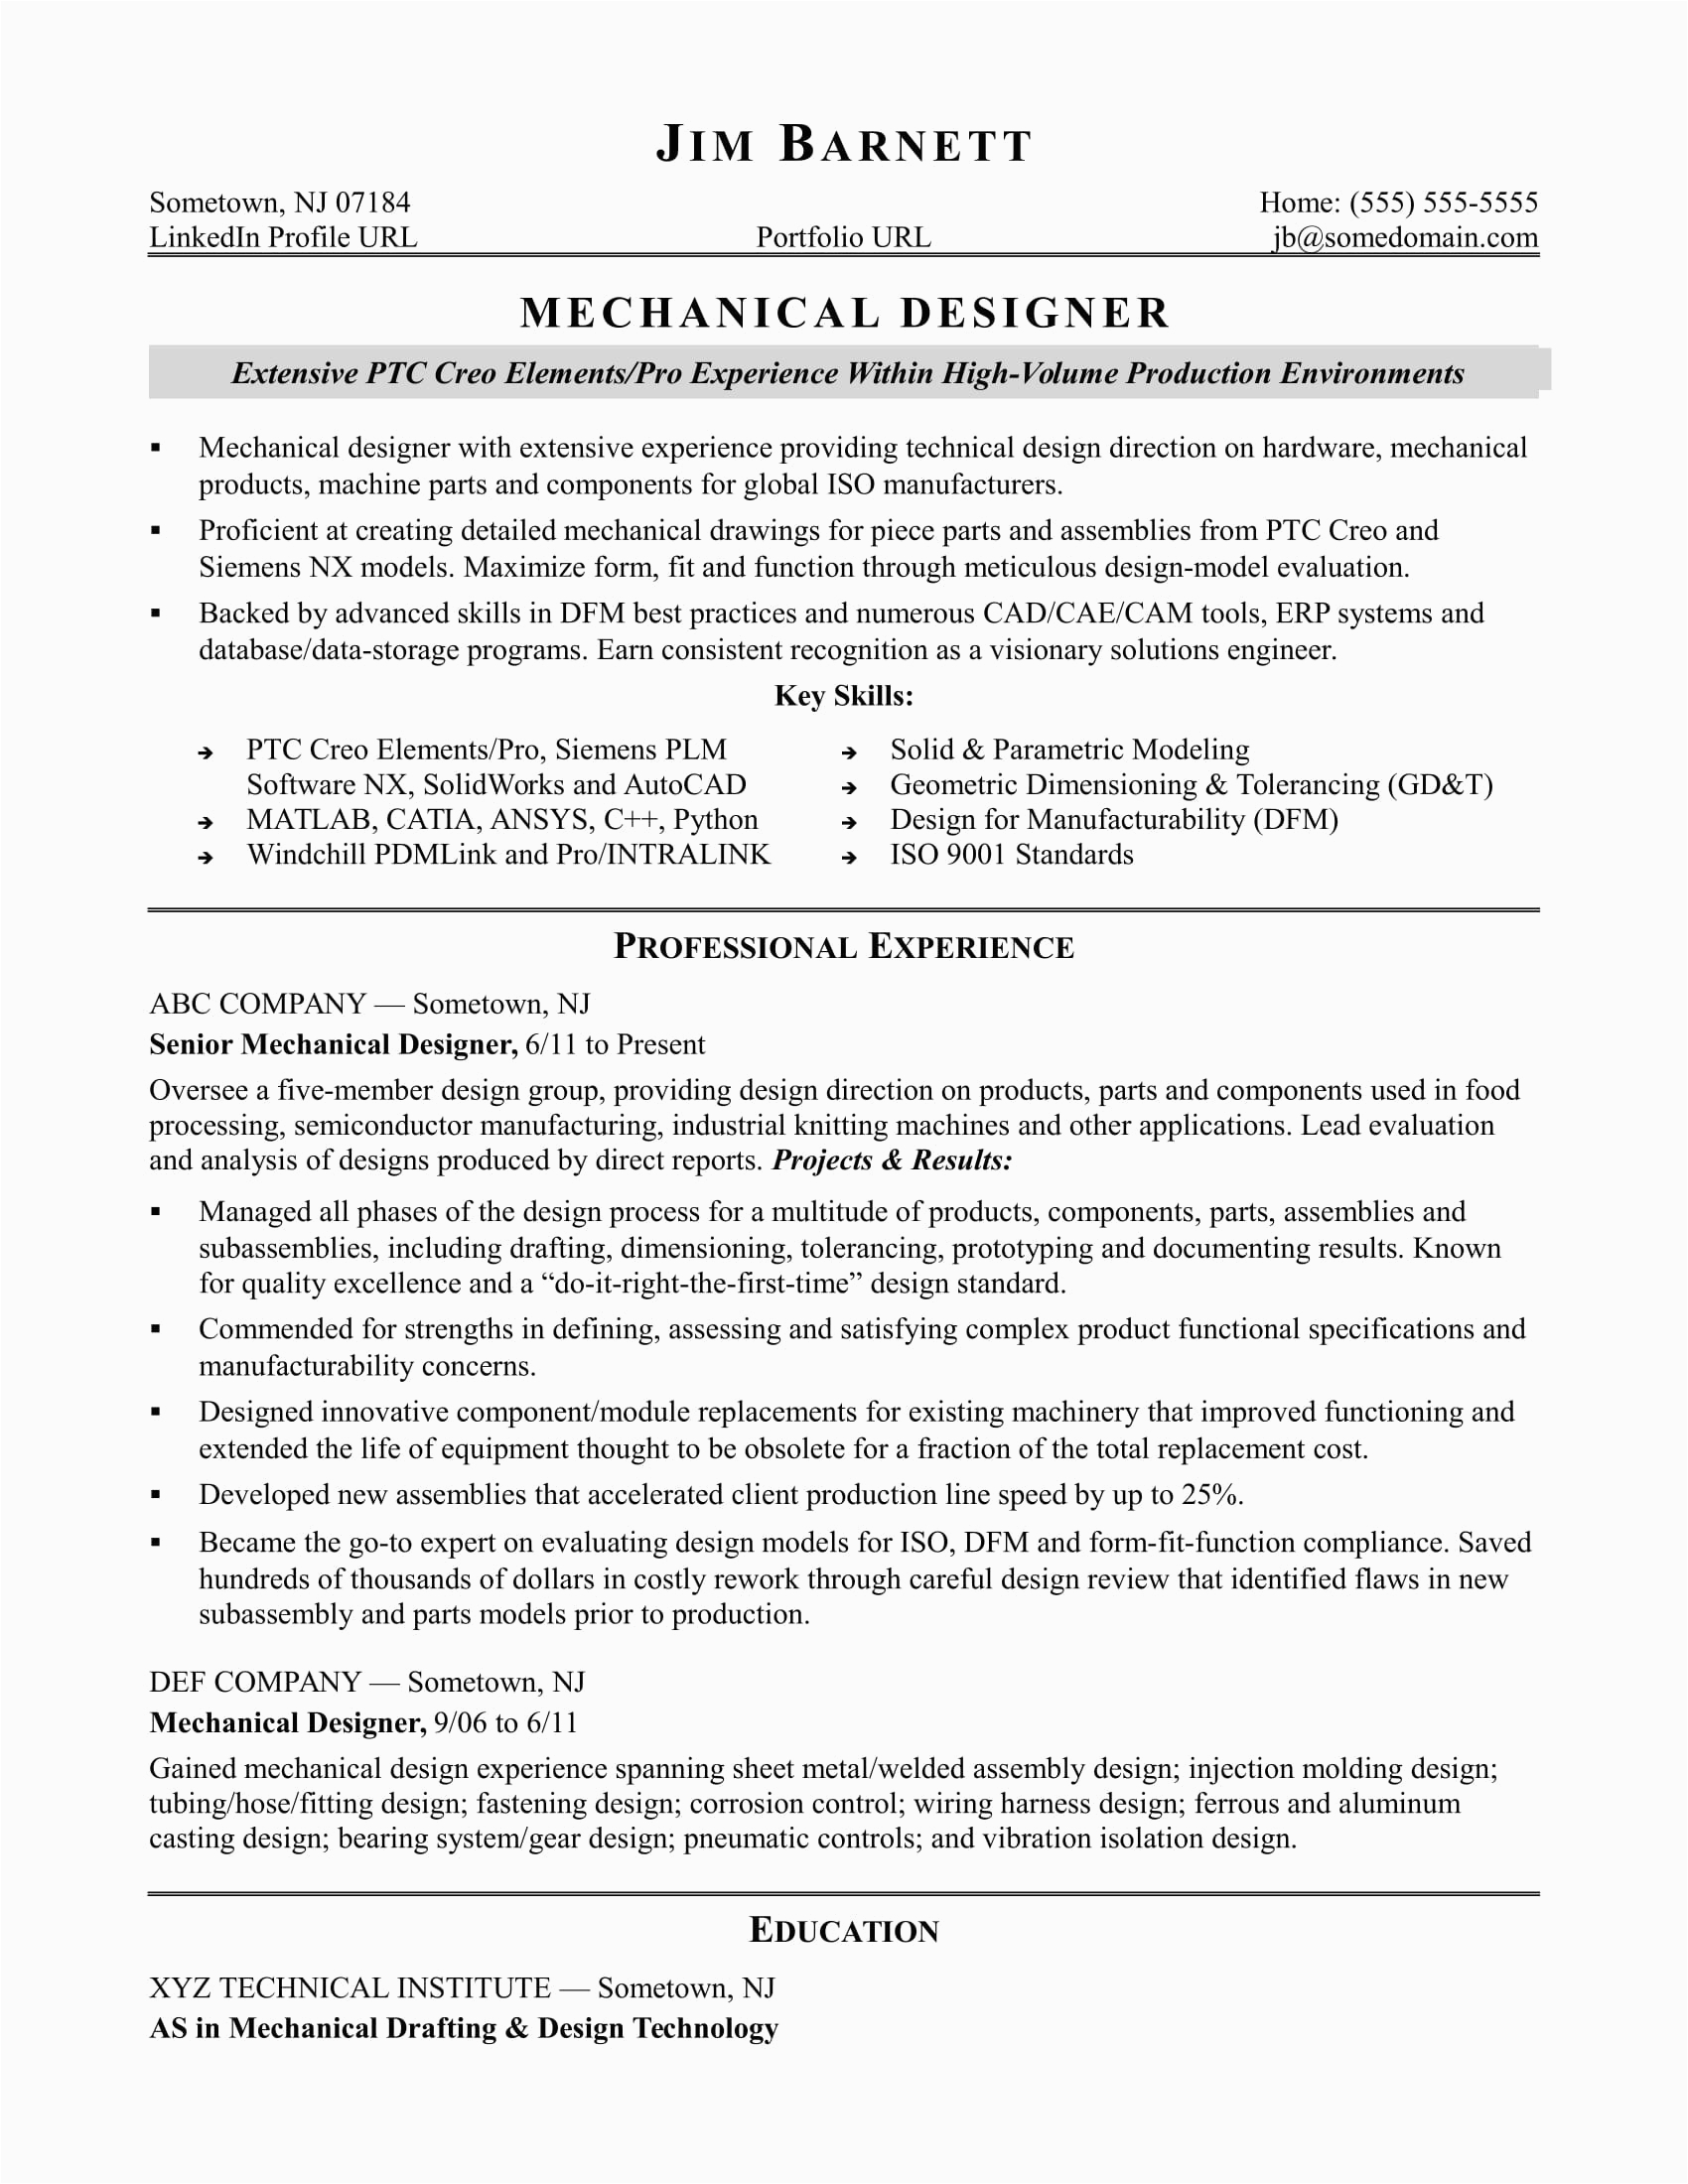 Sample Resume format for Mechanical Design Engineer Sample Resume for An Experienced Mechanical Designer